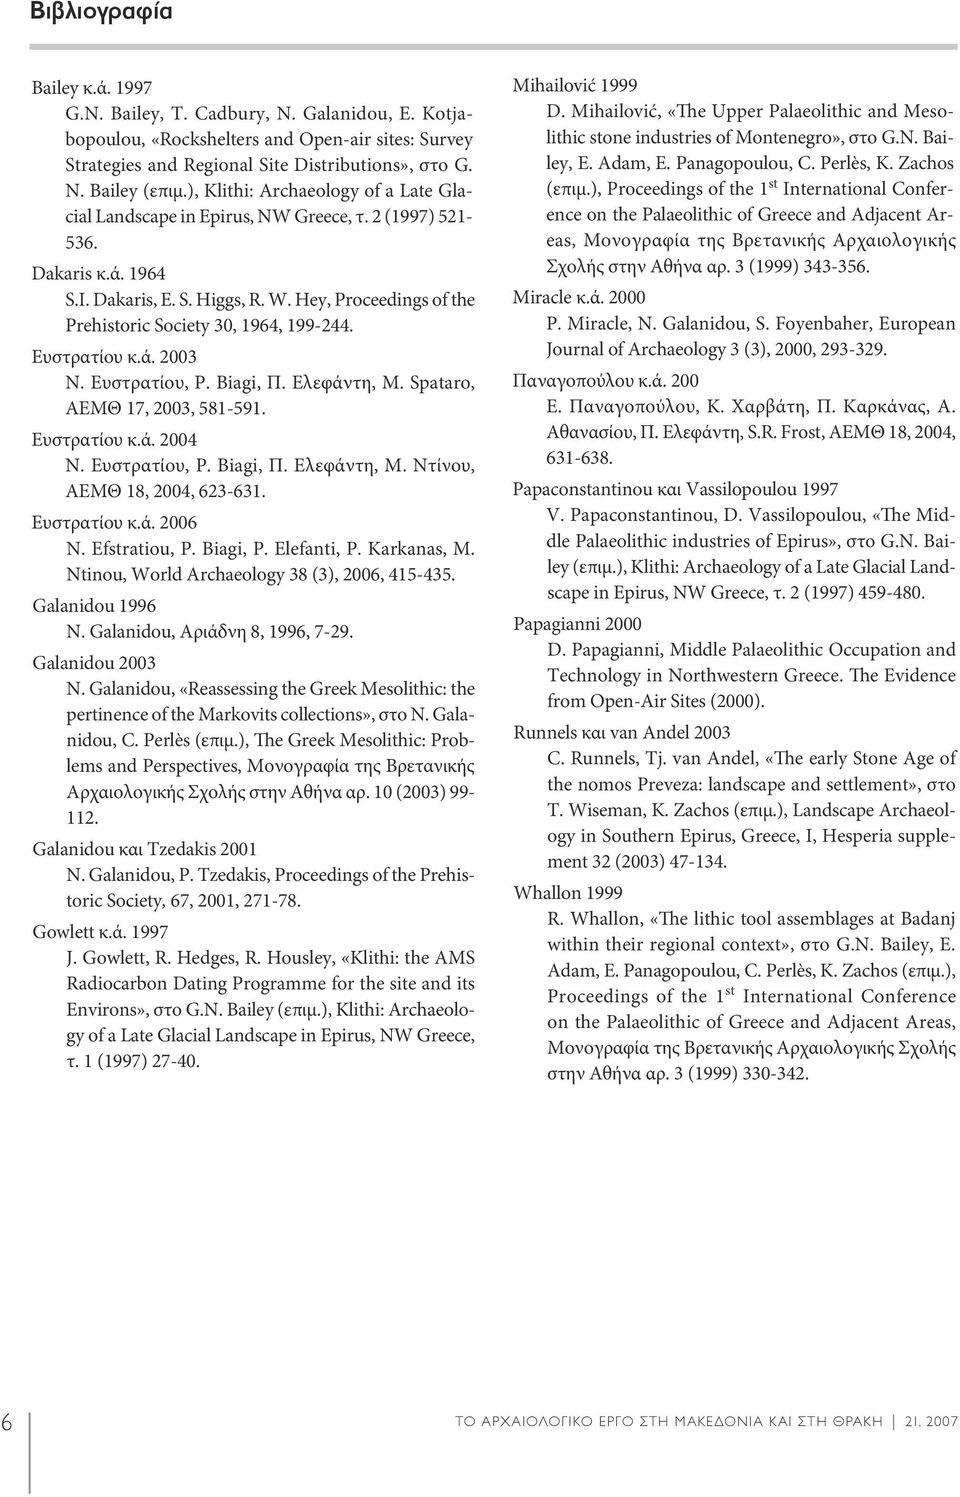 Hey, Proceedings of the Prehistoric Society 30, 1964, 199-244. Ευστρατίου κ.ά. 2003 Ν. Ευστρατίου, P. Biagi, Π. Ελεφάντη, M. Spataro, ΑΕΜΘ 17, 2003, 581-591. Ευστρατίου κ.ά. 2004 Ν. Ευστρατίου, P. Biagi, Π. Ελεφάντη, Μ.